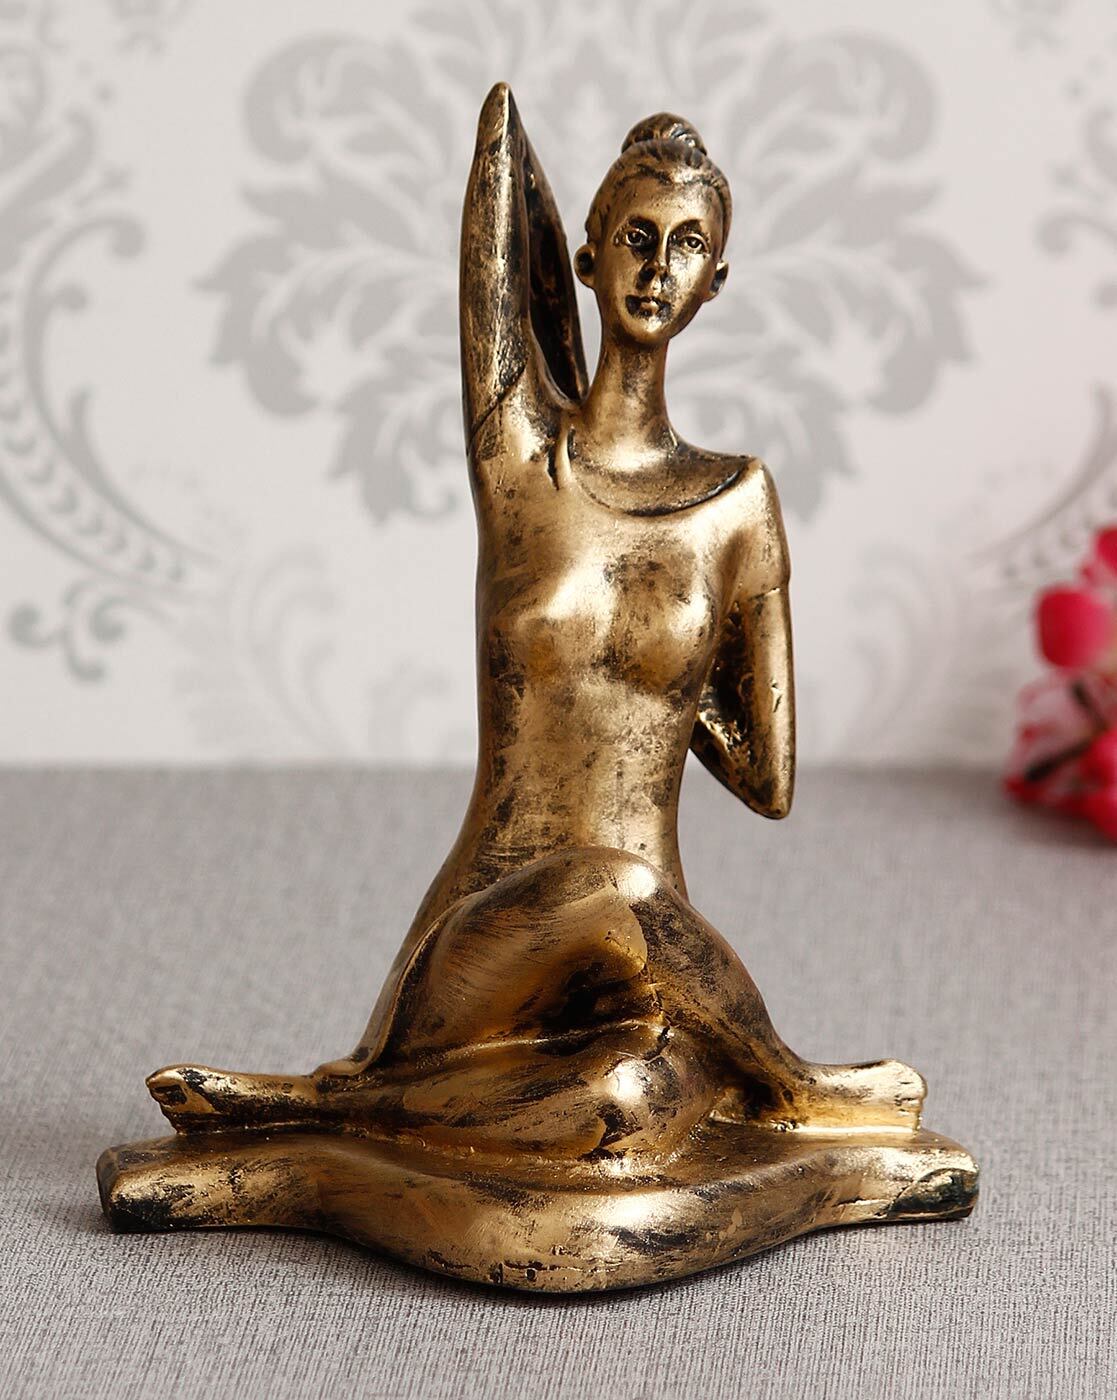 Lord Shiva Idol Decorative Handcrafted Brass Figurine